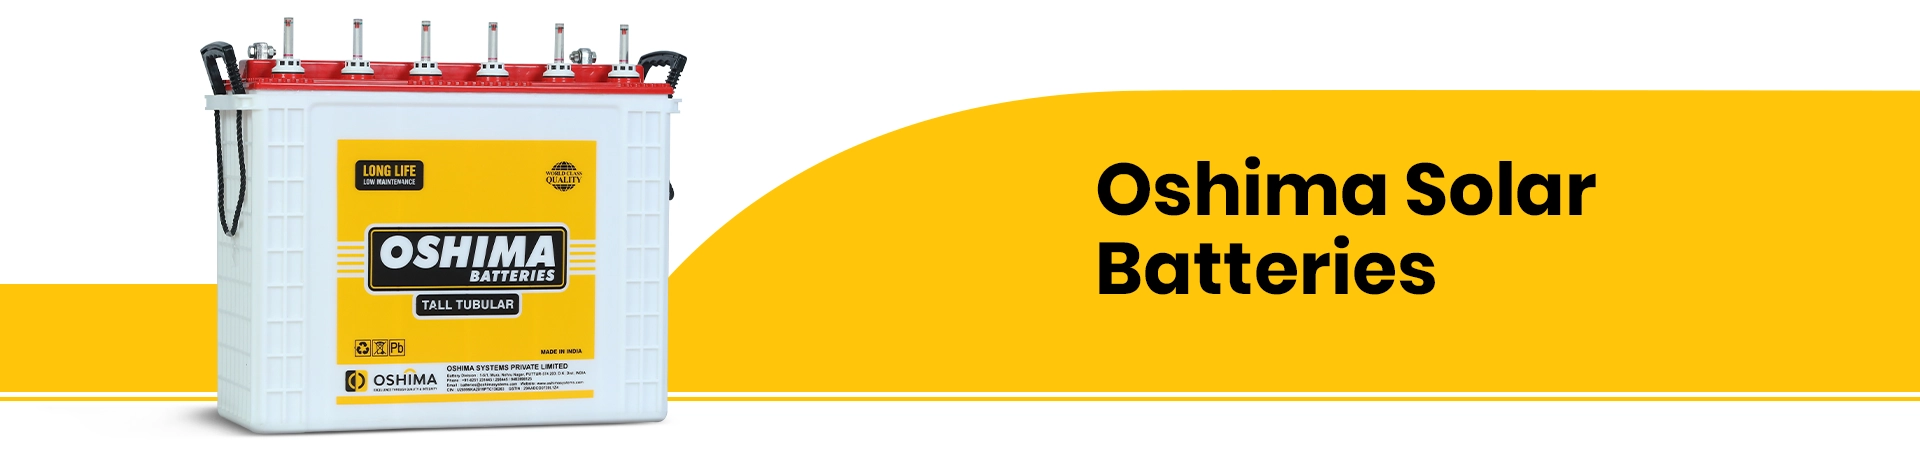 oshima-solar-batteries